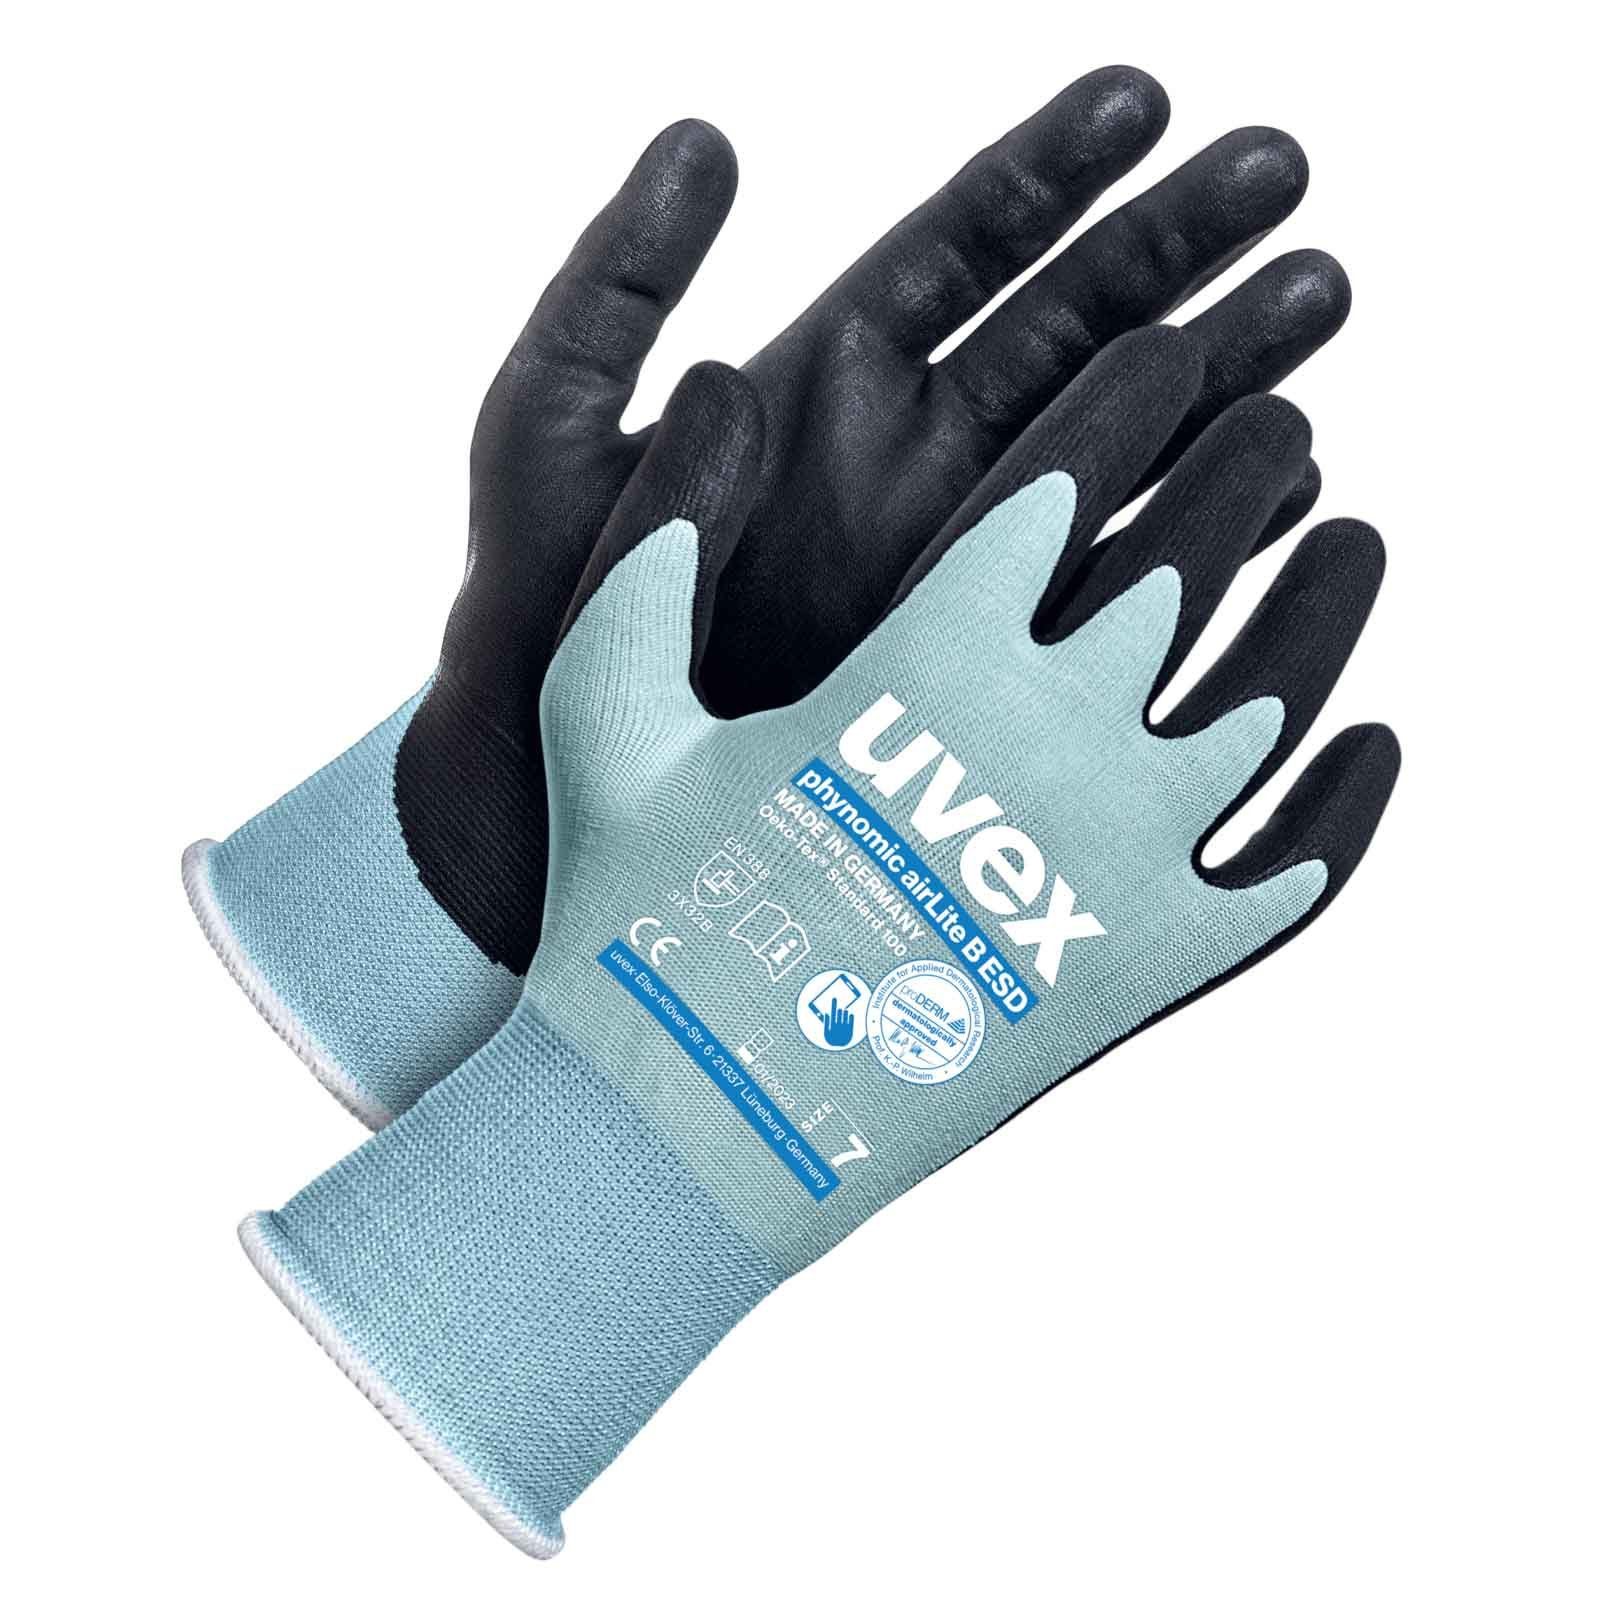 B Mechaniker-Handschuhe phynomic 60078, Uvex Touchscreen (Spar-Set) airLite Schnittschutzhandschuhe ESD uvex